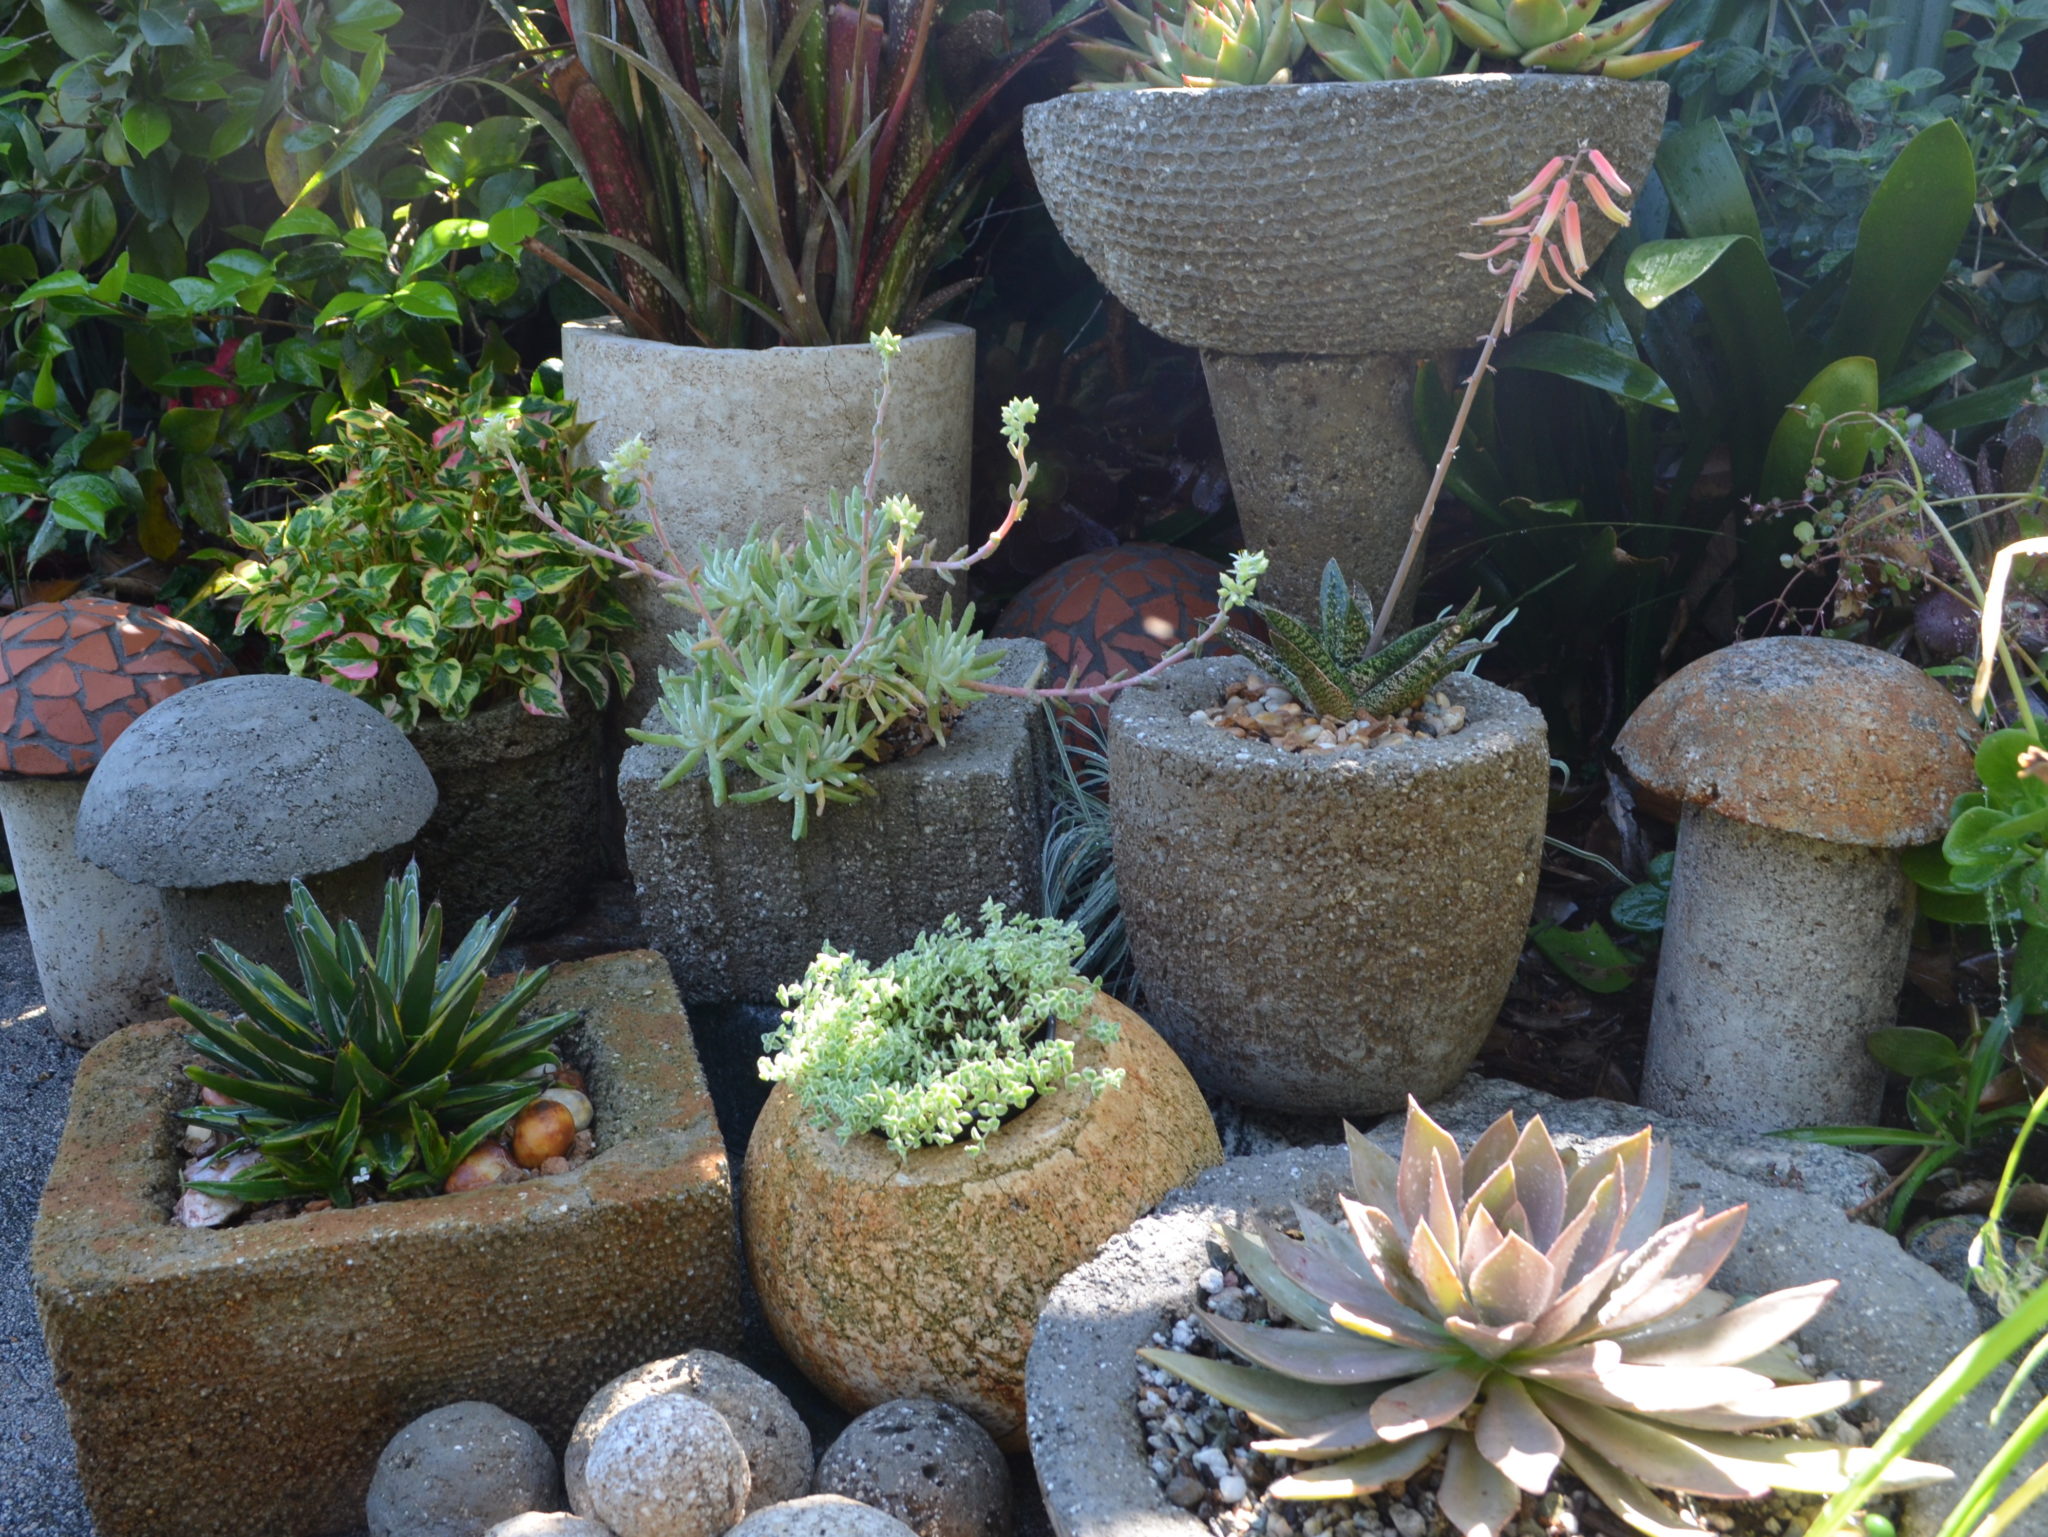 hypertufa pots planted with succulents